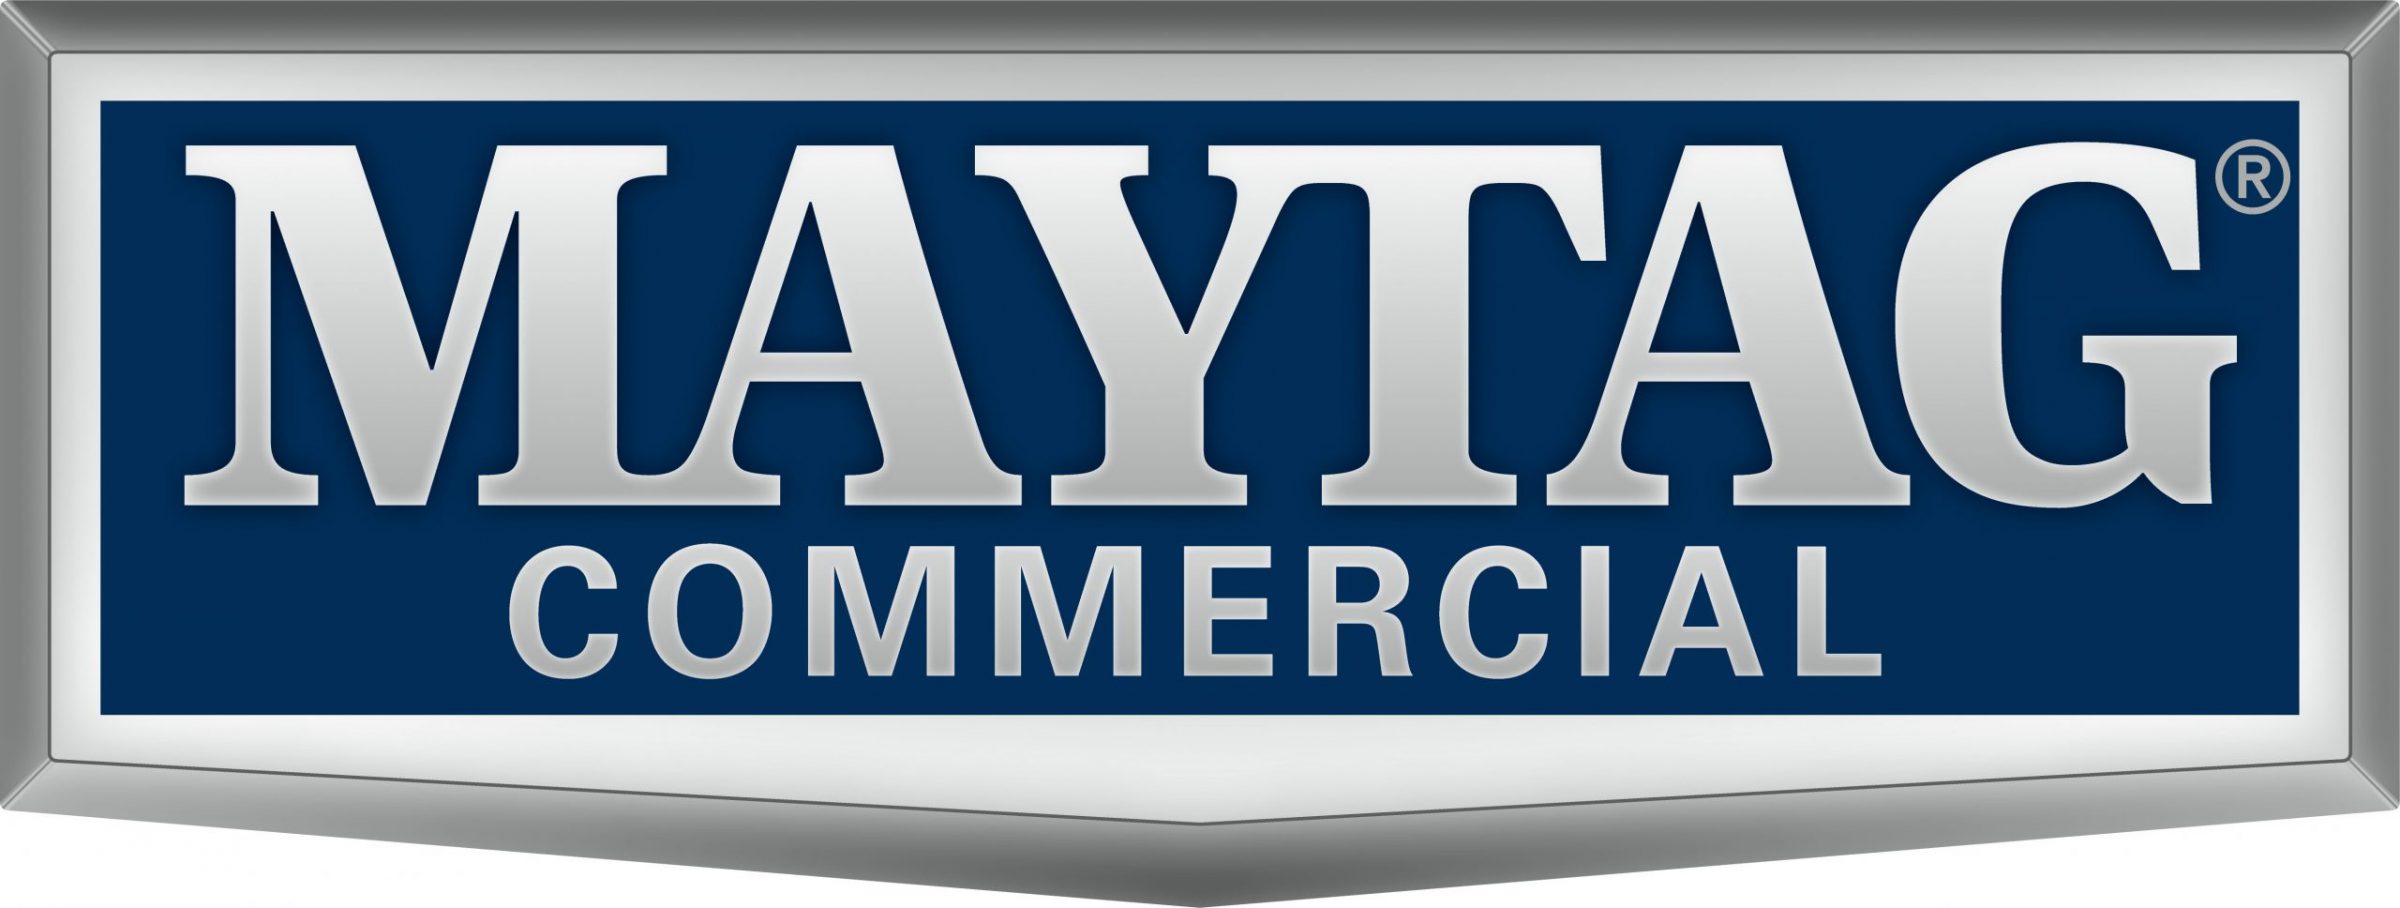 Maytag commercial logo